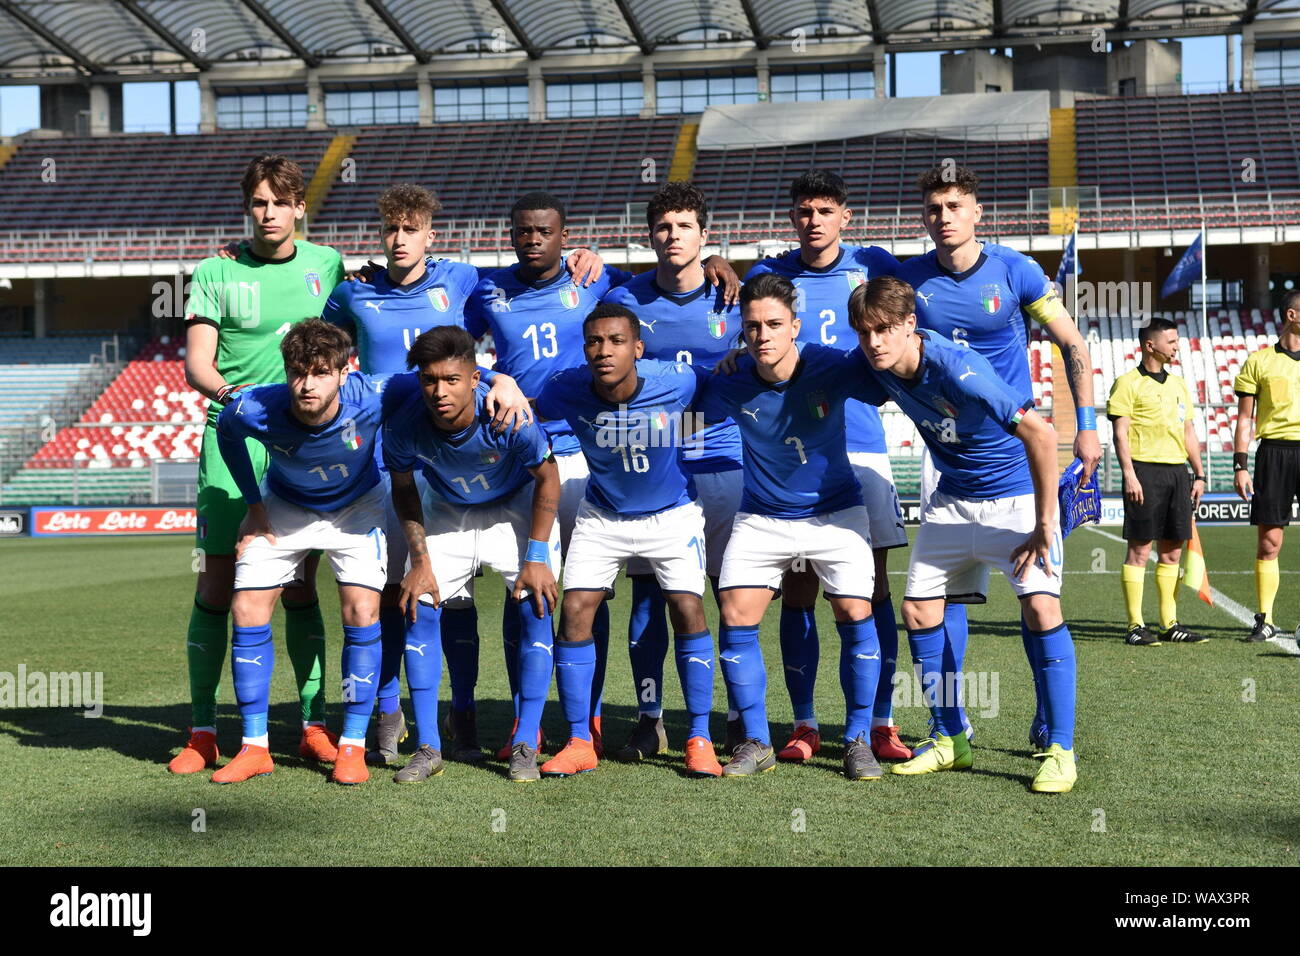 Italia under 19 during ITALIA U19 VS BELGIO U19, Padova, Italy, 20 Mar  2019, Calcio Nazionale Italiana di Calcio Stock Photo - Alamy